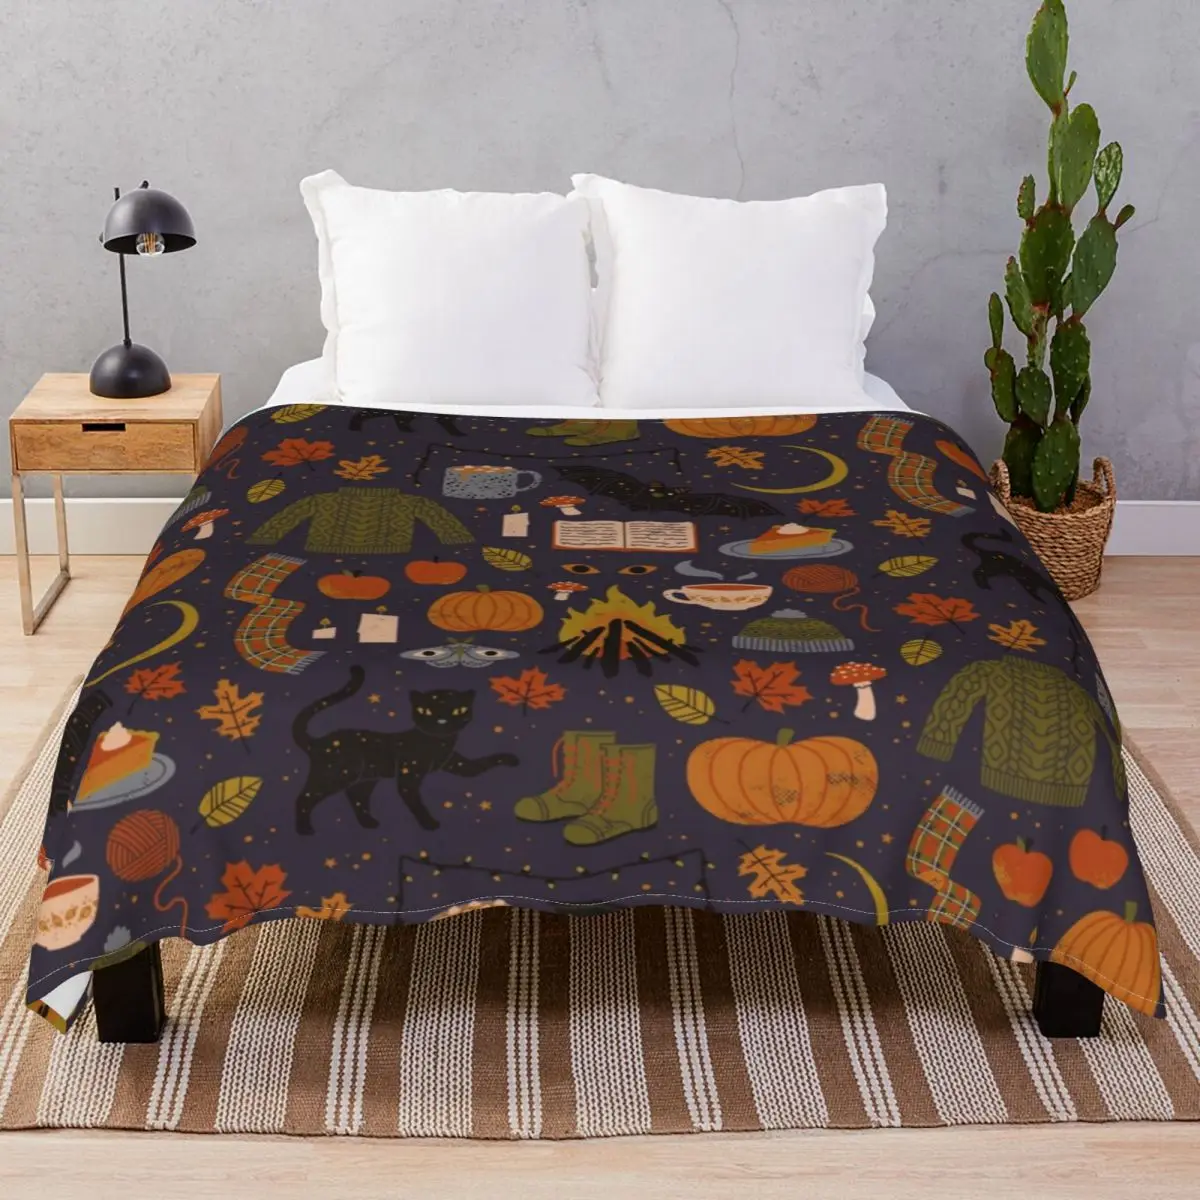 Autumn Nights Blanket Fleece Print Portable Throw Blankets for Bed Sofa Travel Cinema